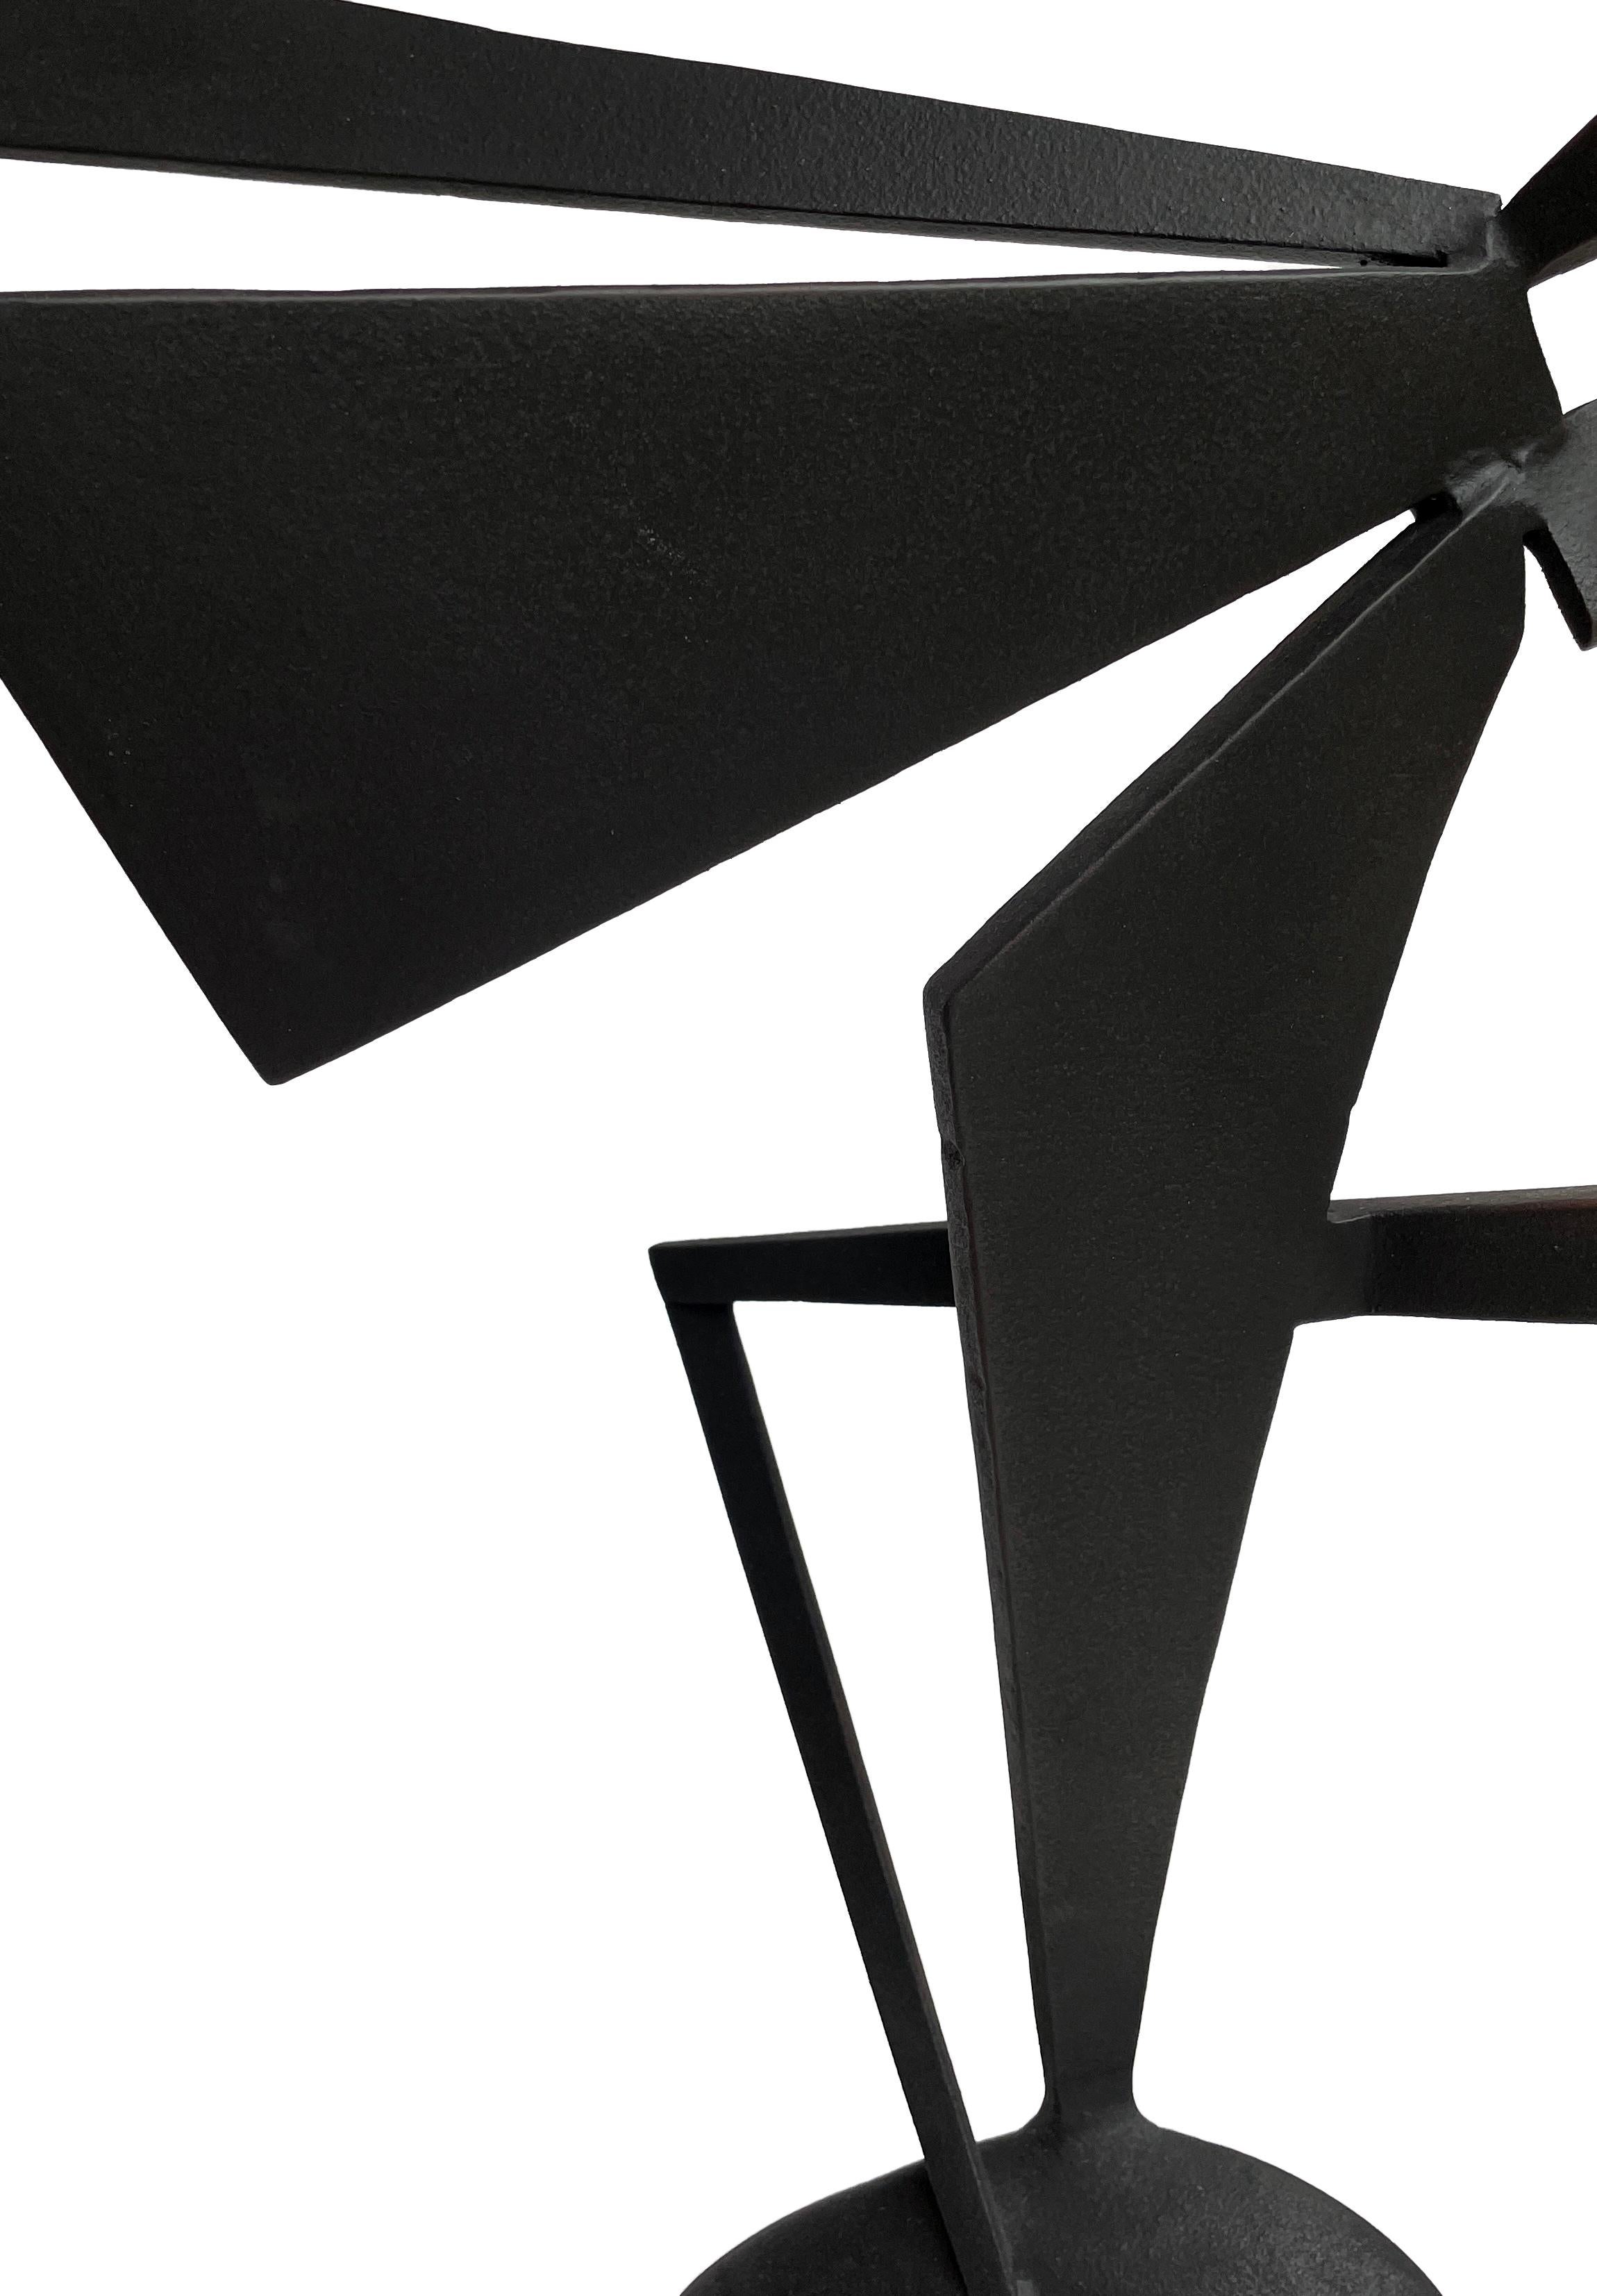  Looking Back - Black Abstract Geometric Form, Welded Steel Sculpture  7